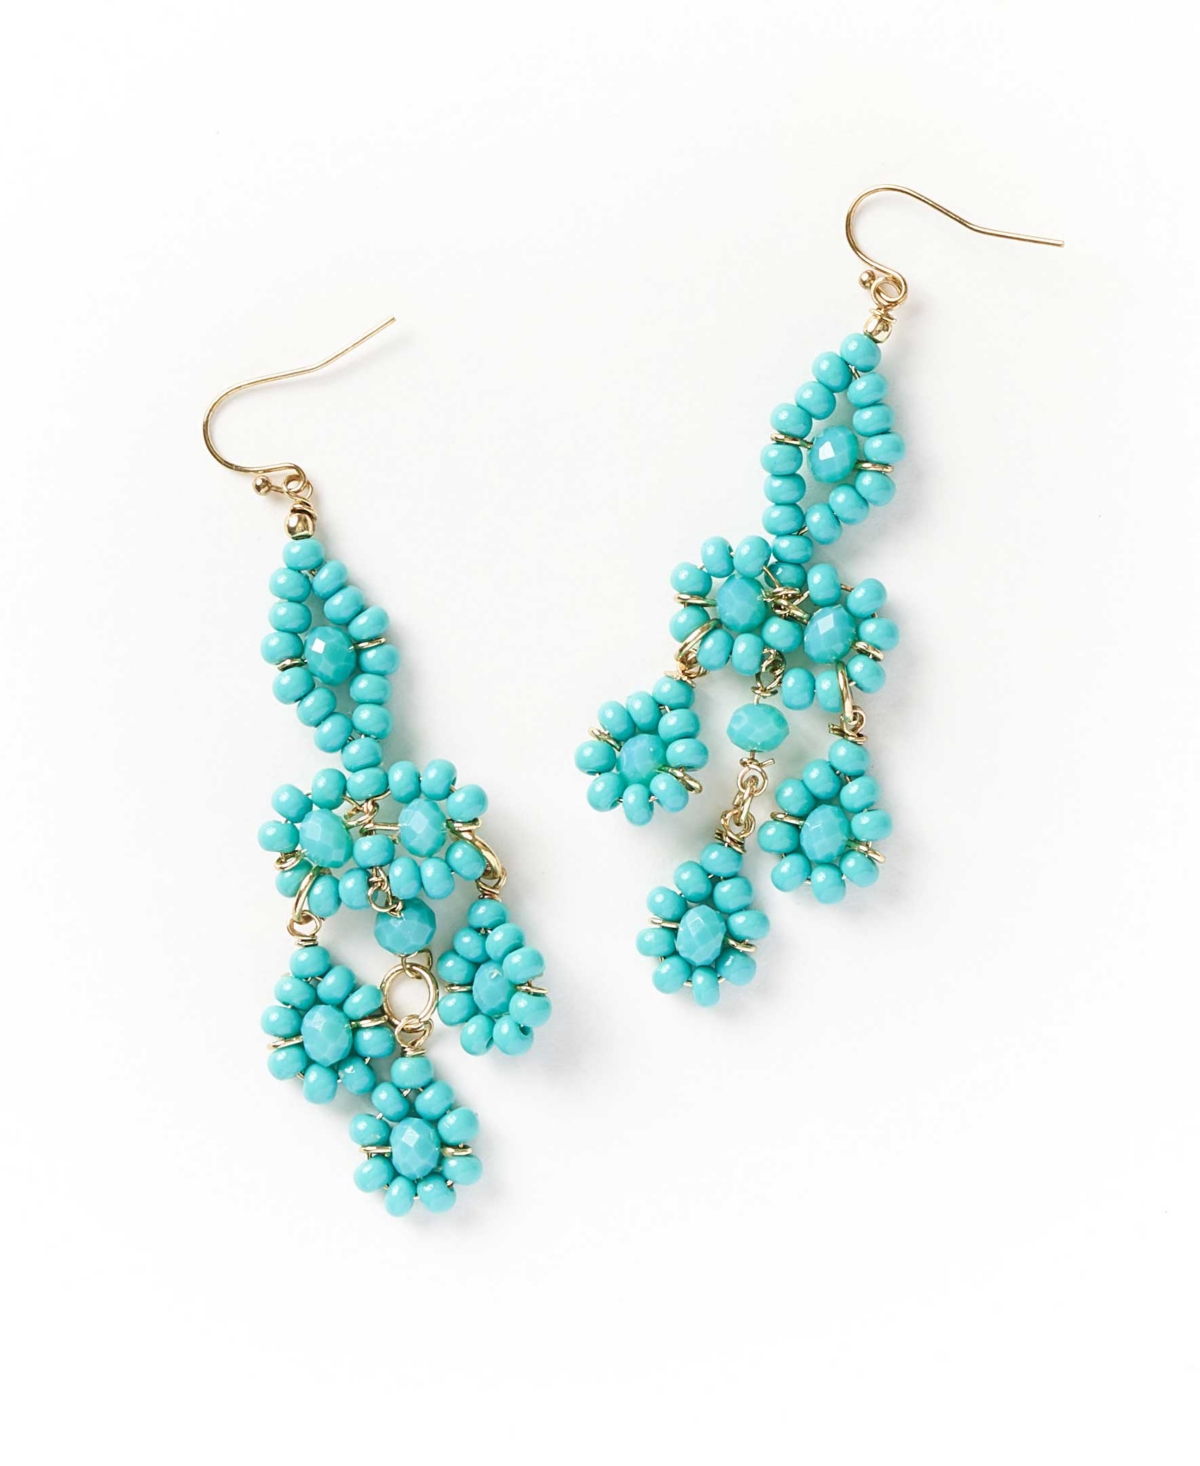 Cascade Earrings - Turquoise